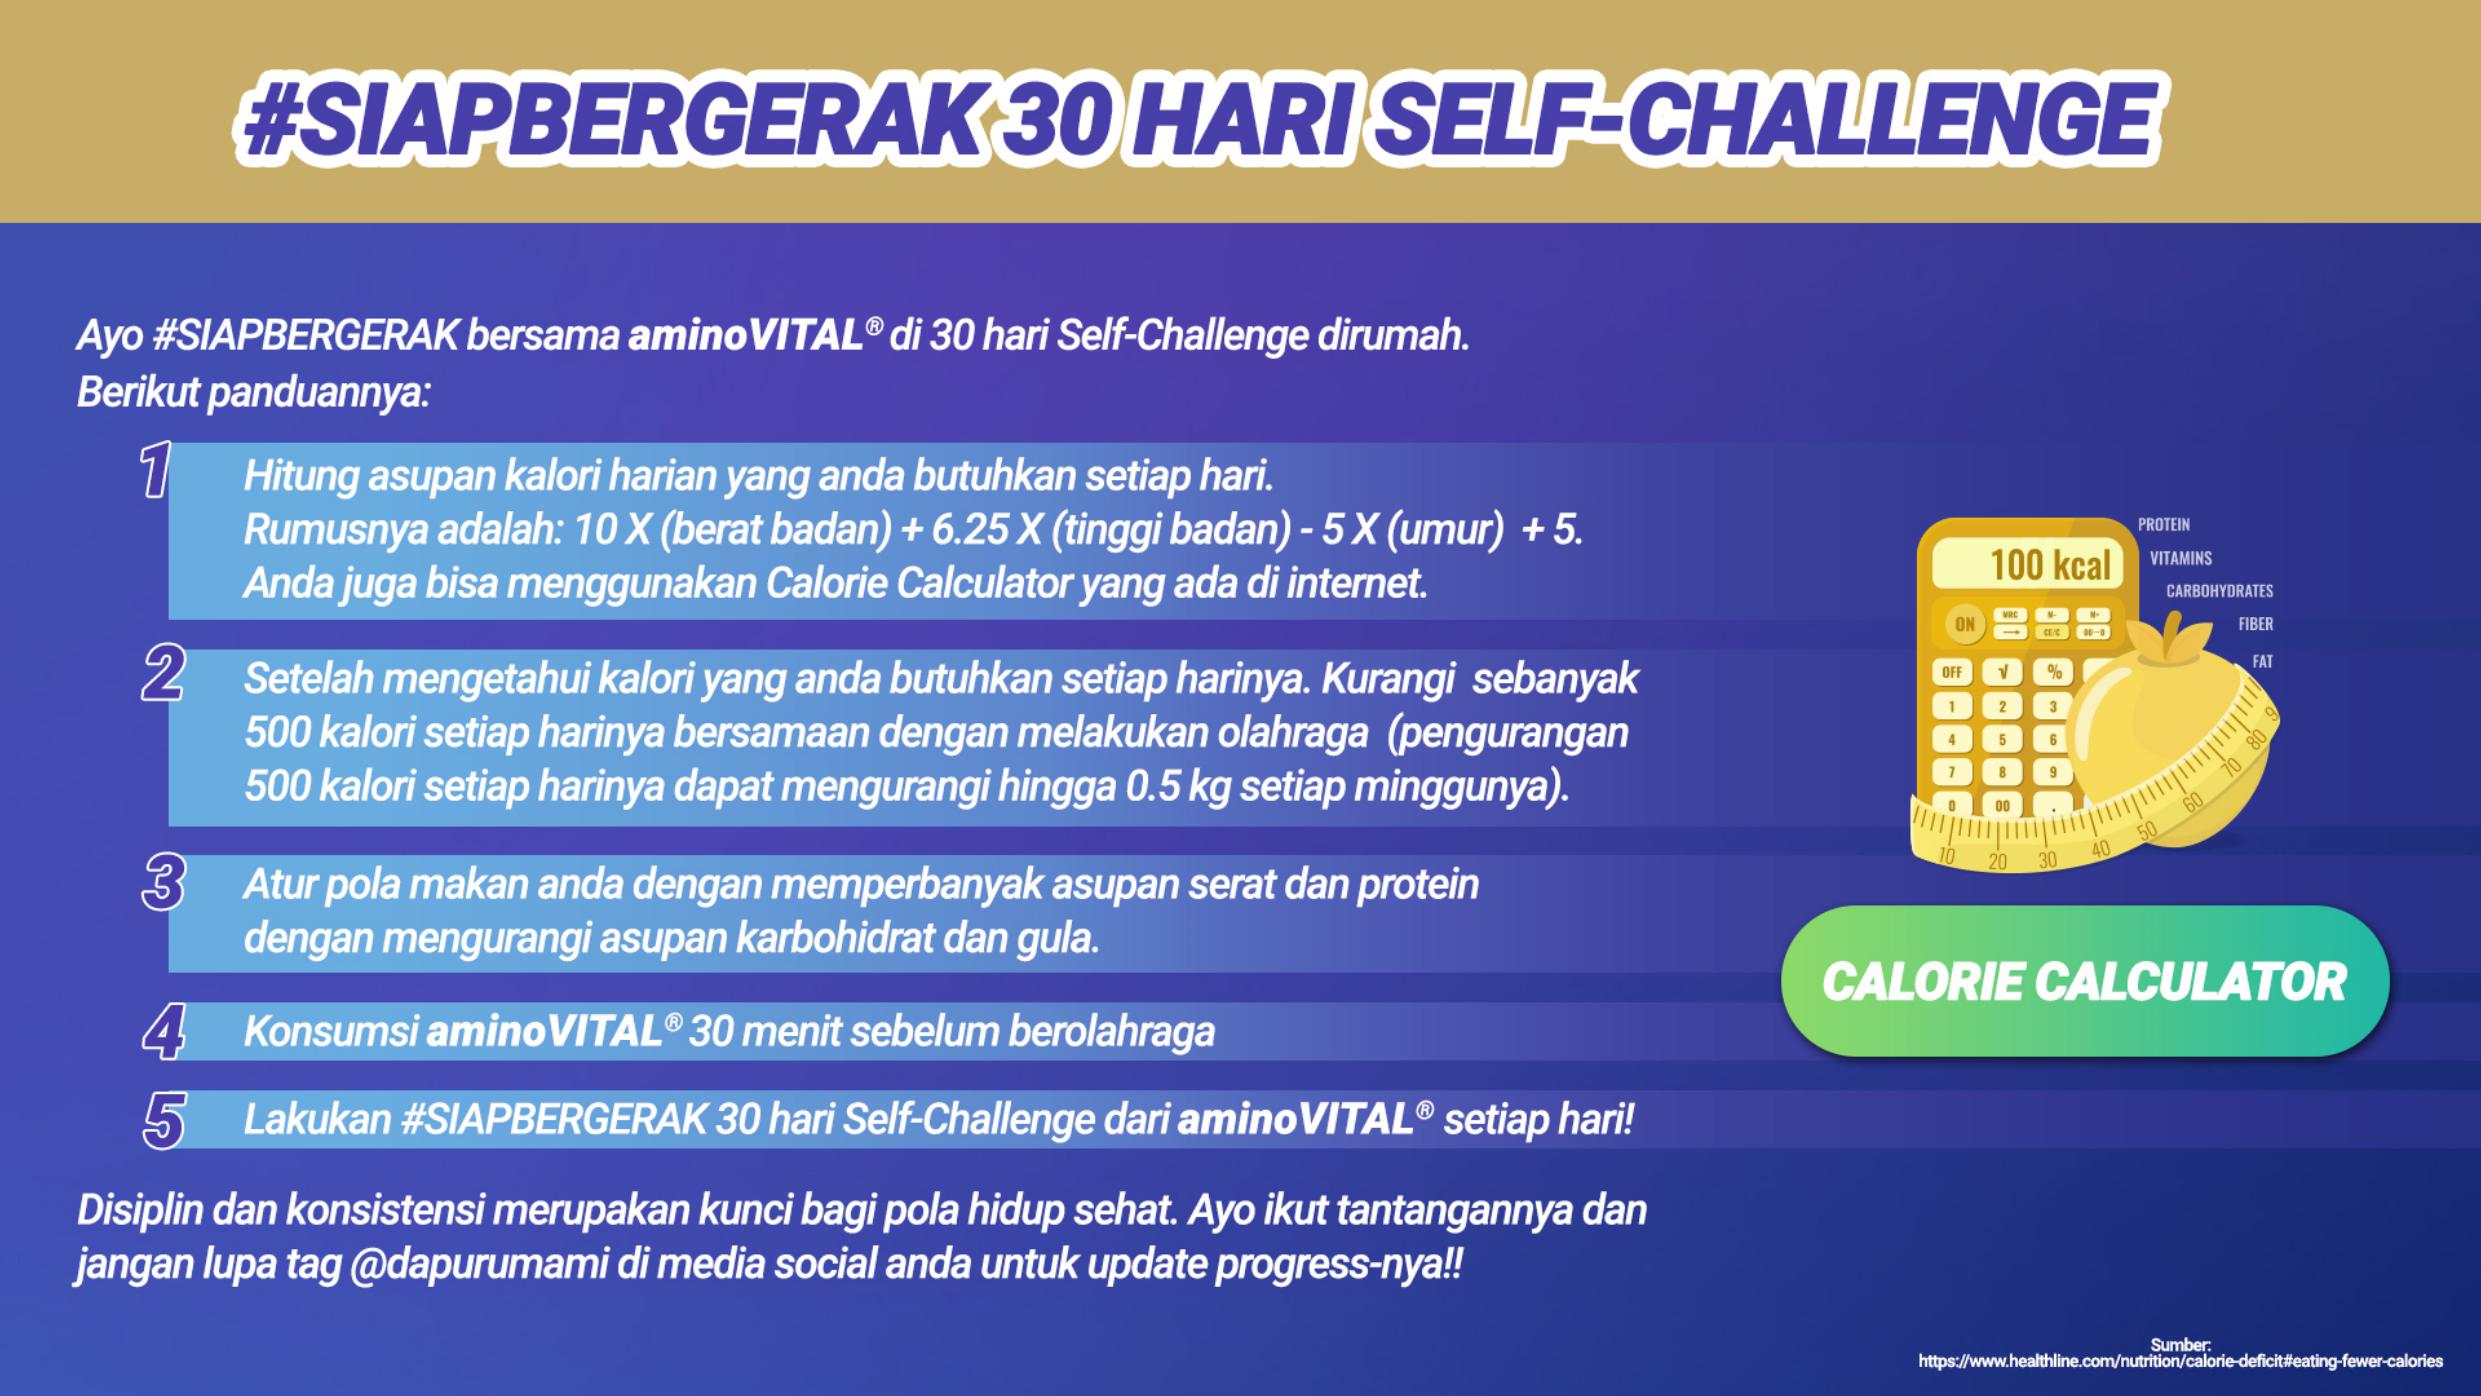 #SIAPBERGERAK 30 HARI SELF-CHALLENGE